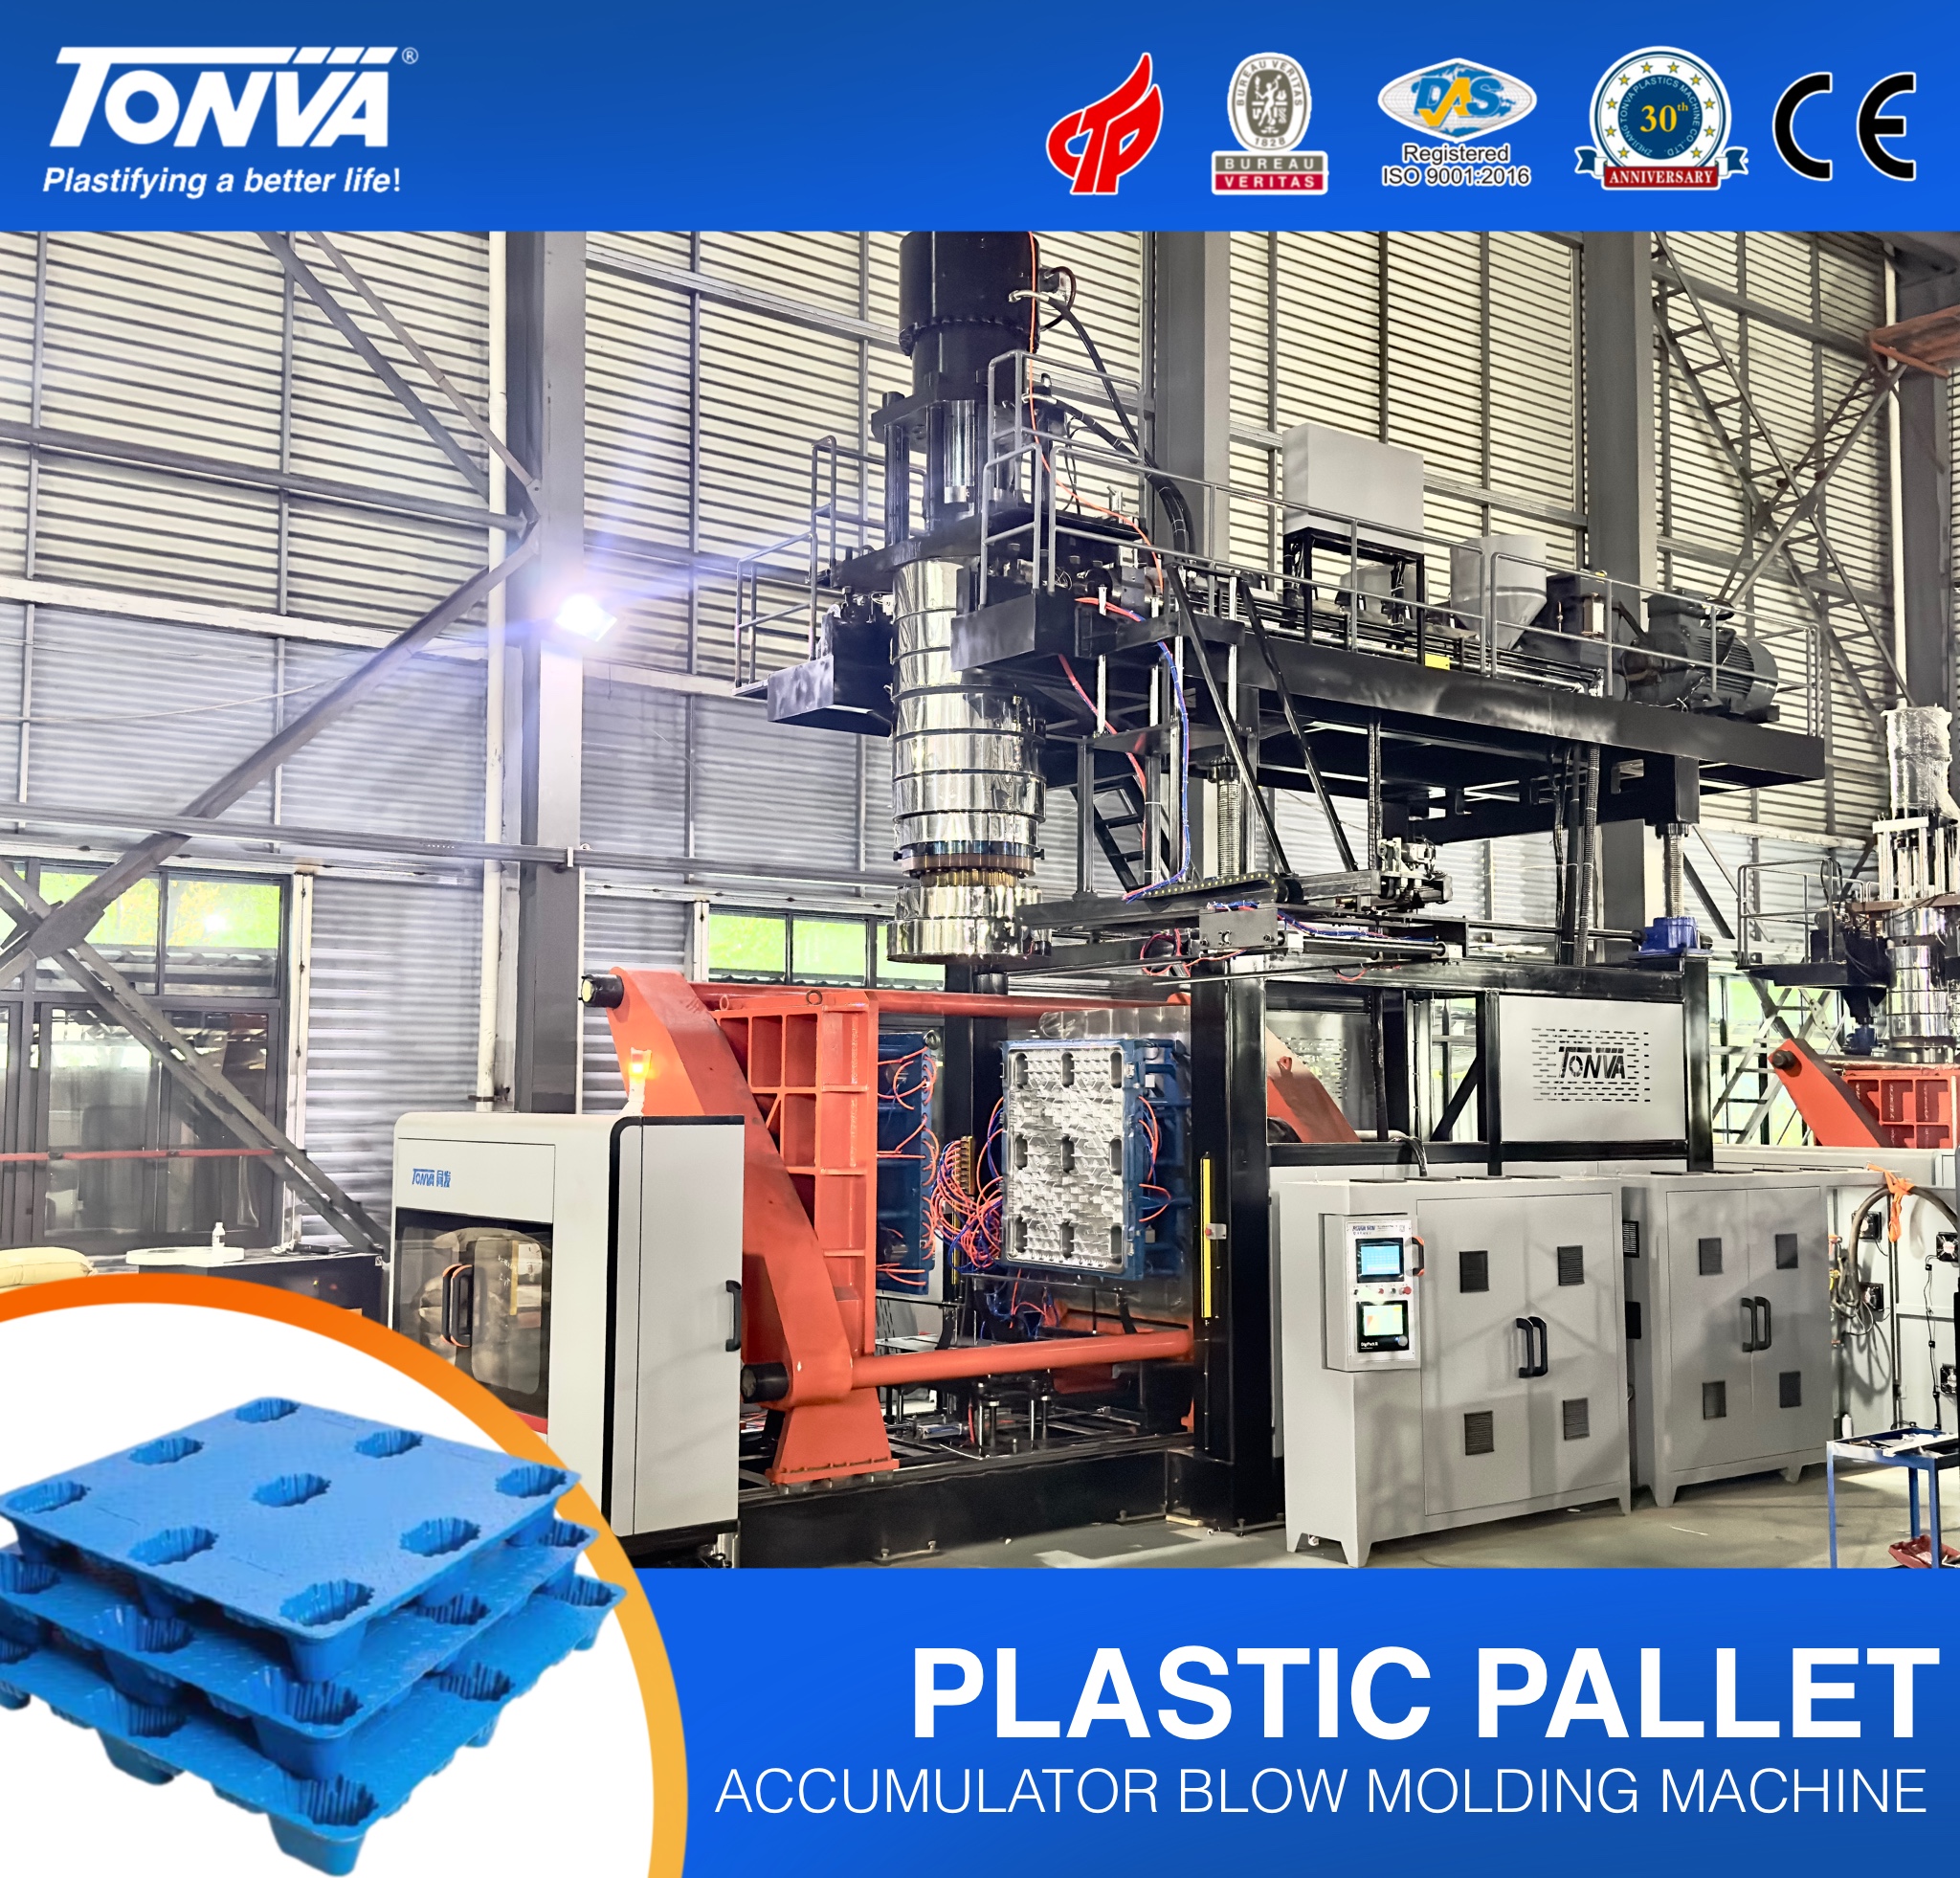 TONVA plastic pallet making machine 1000L blow moulding masine Featured Image